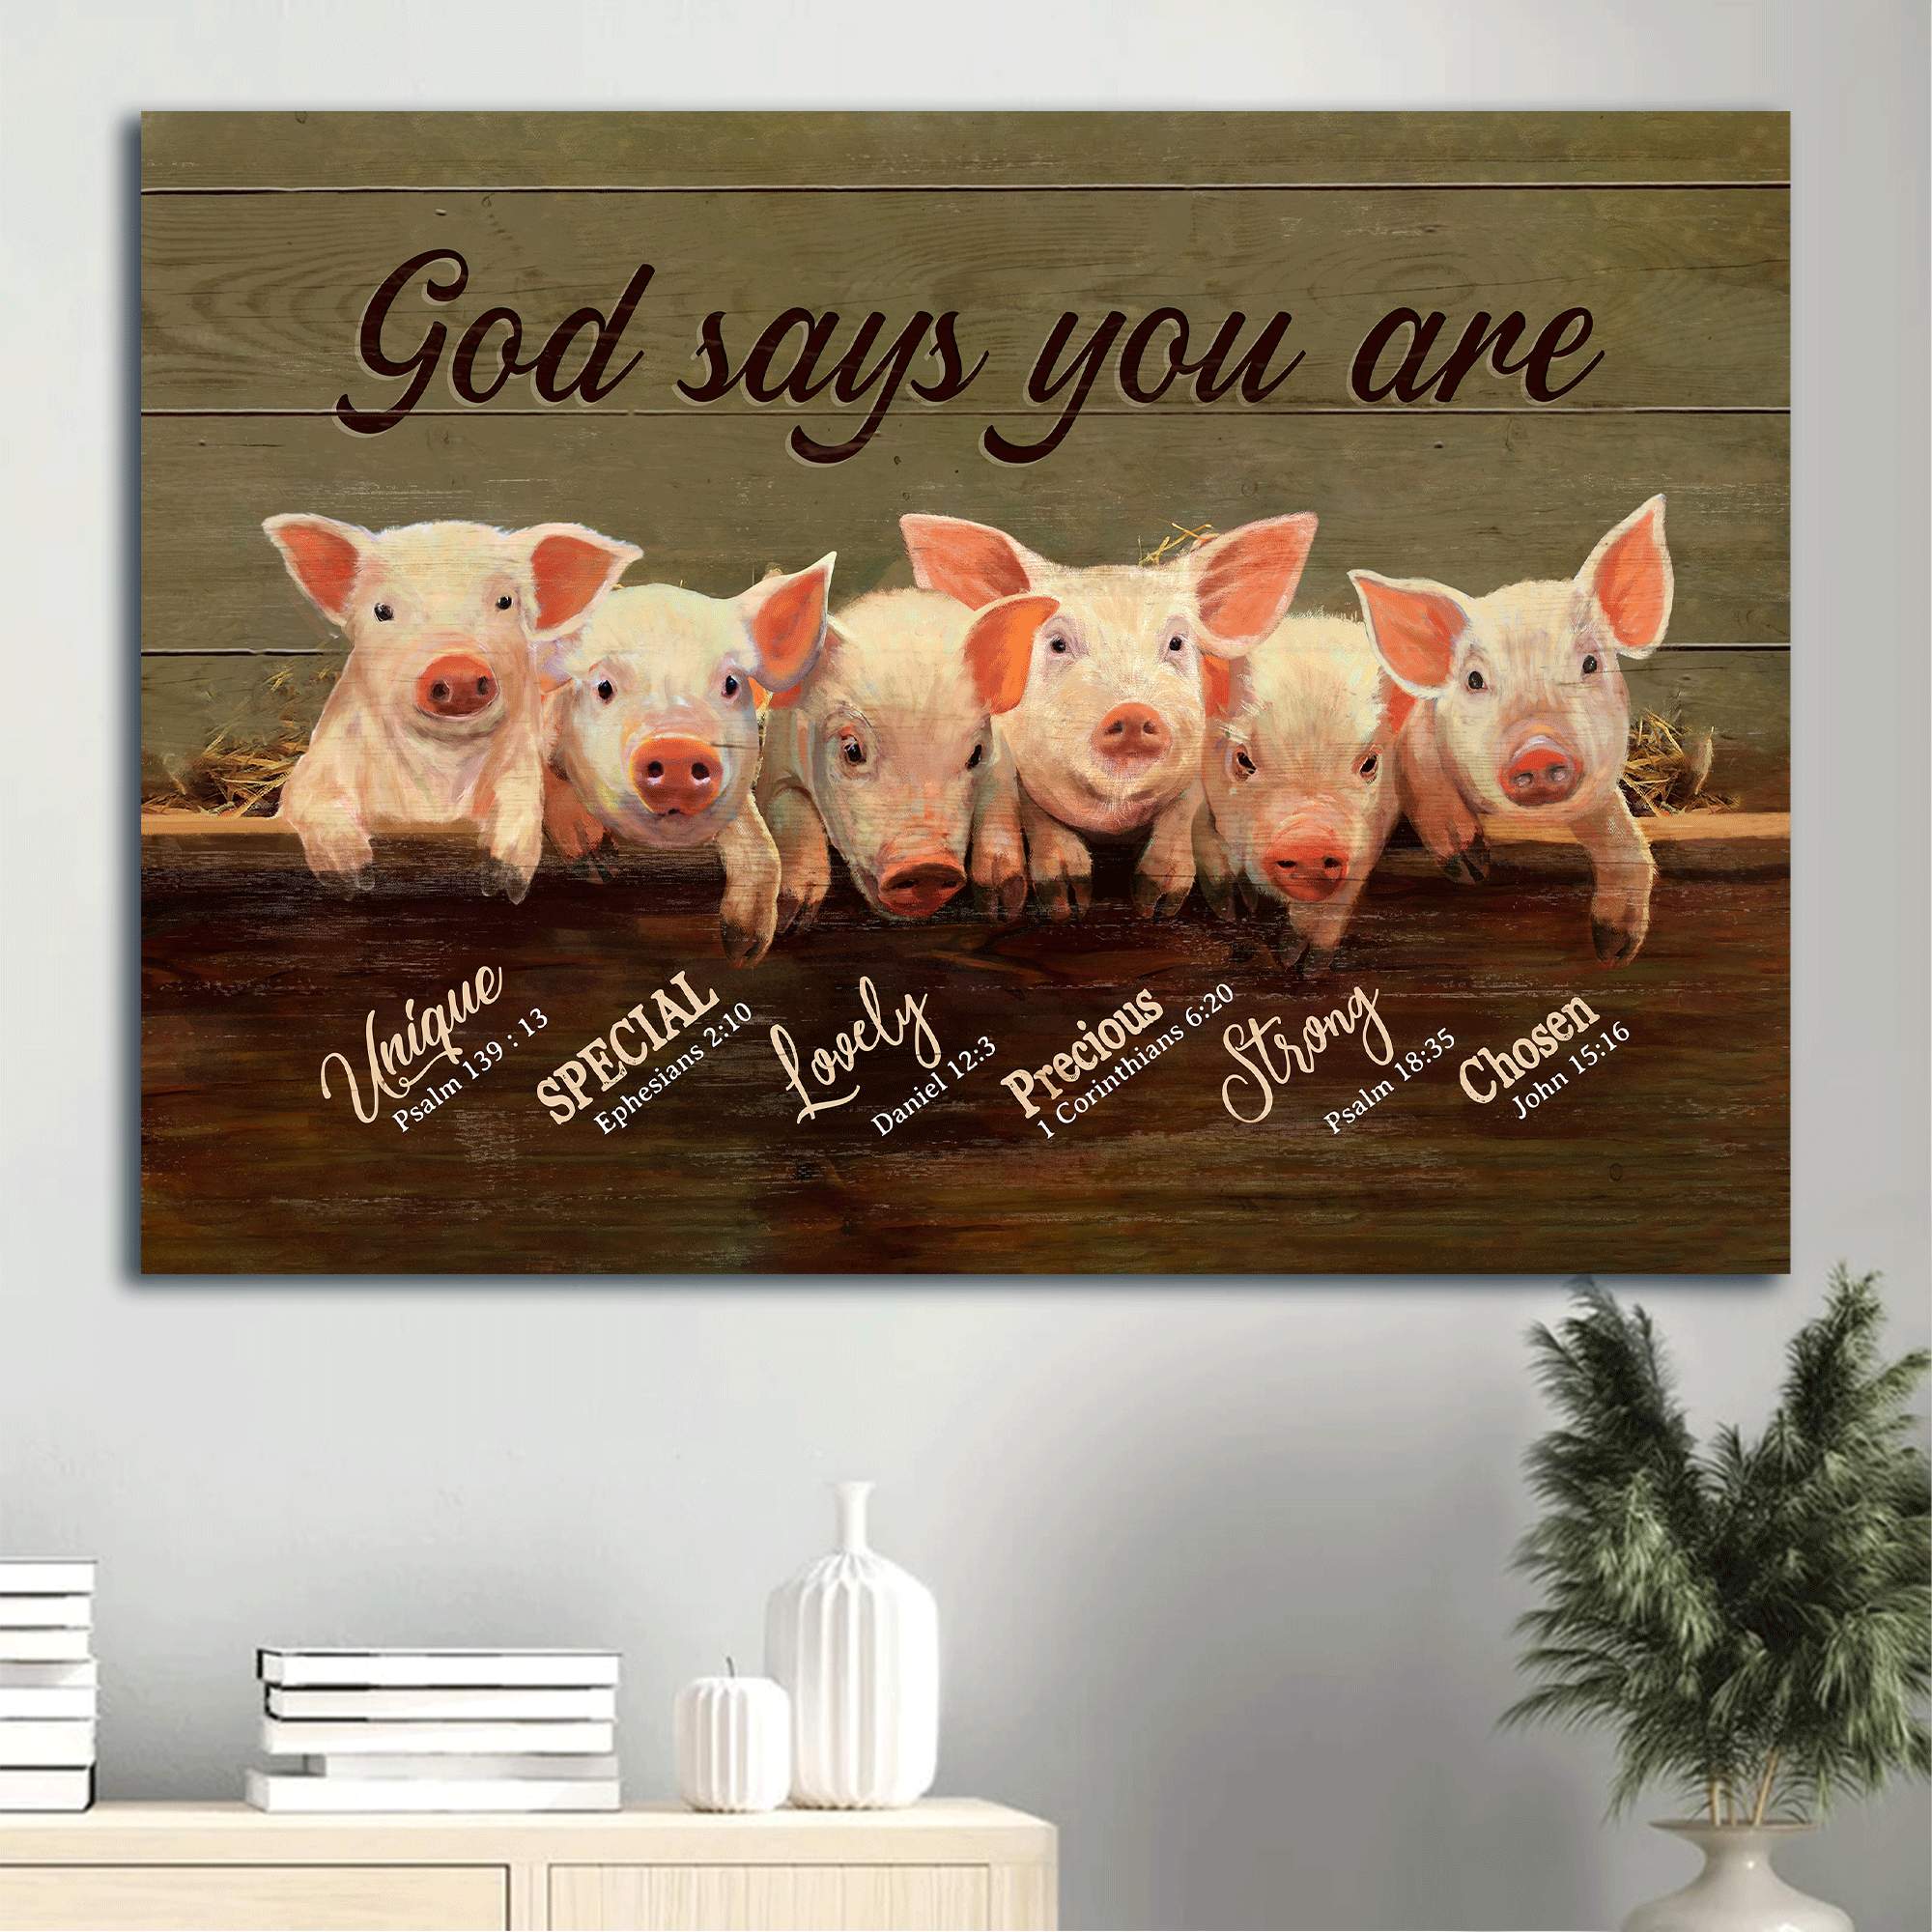 Jesus Landscape Canvas - Lovely pigs, God says you are Landscape Canvas - Gift For Christian Landscape Canvas Prints, Wall Art